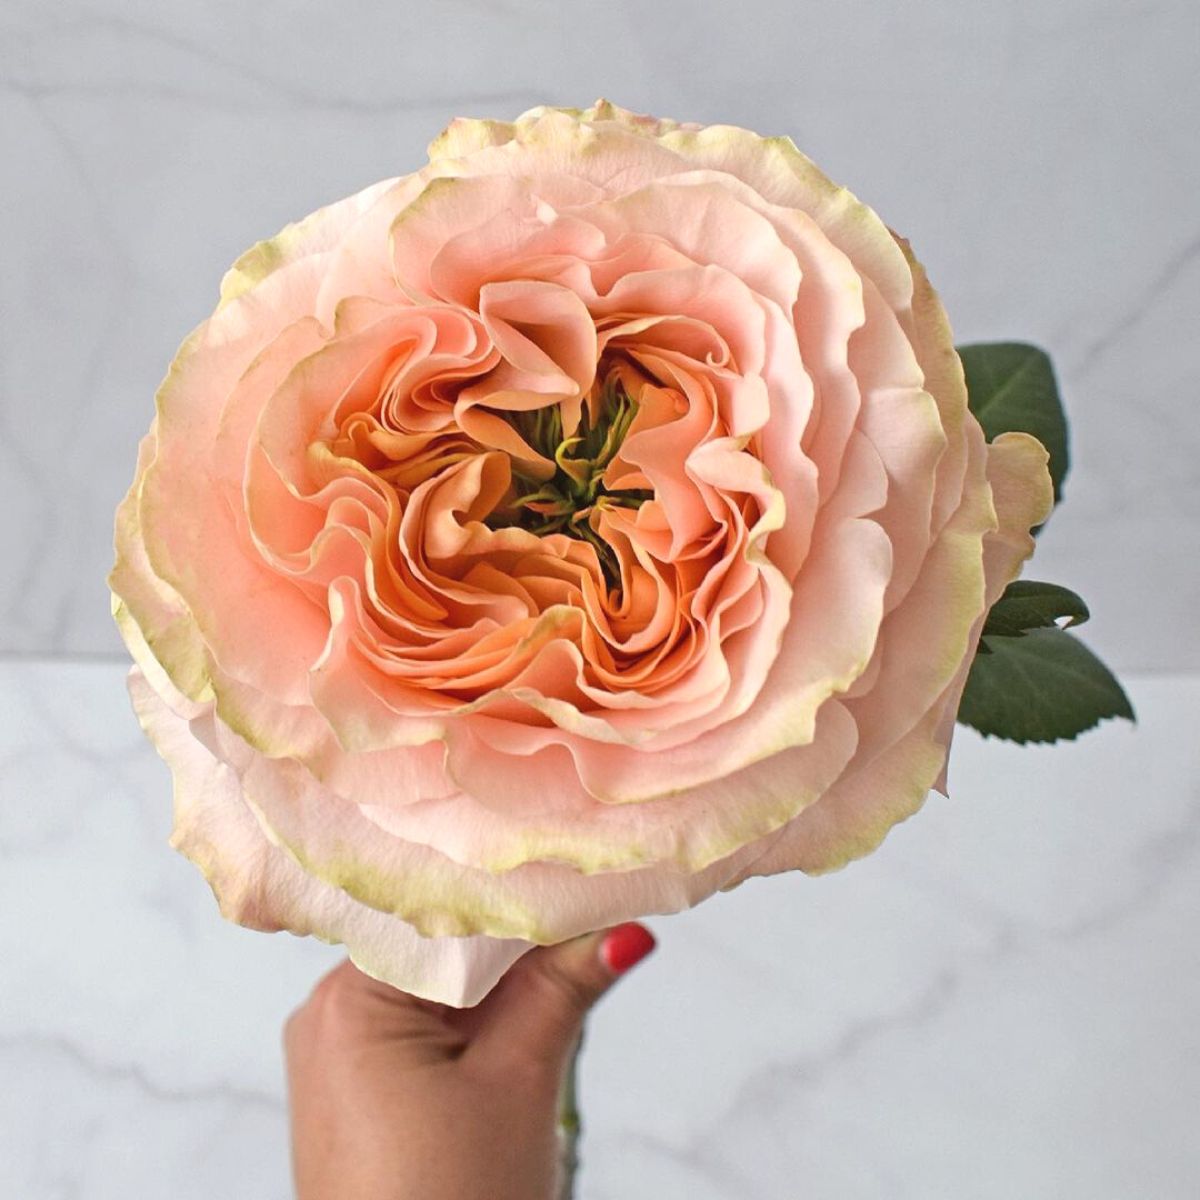 The peachy Princess Crown rose